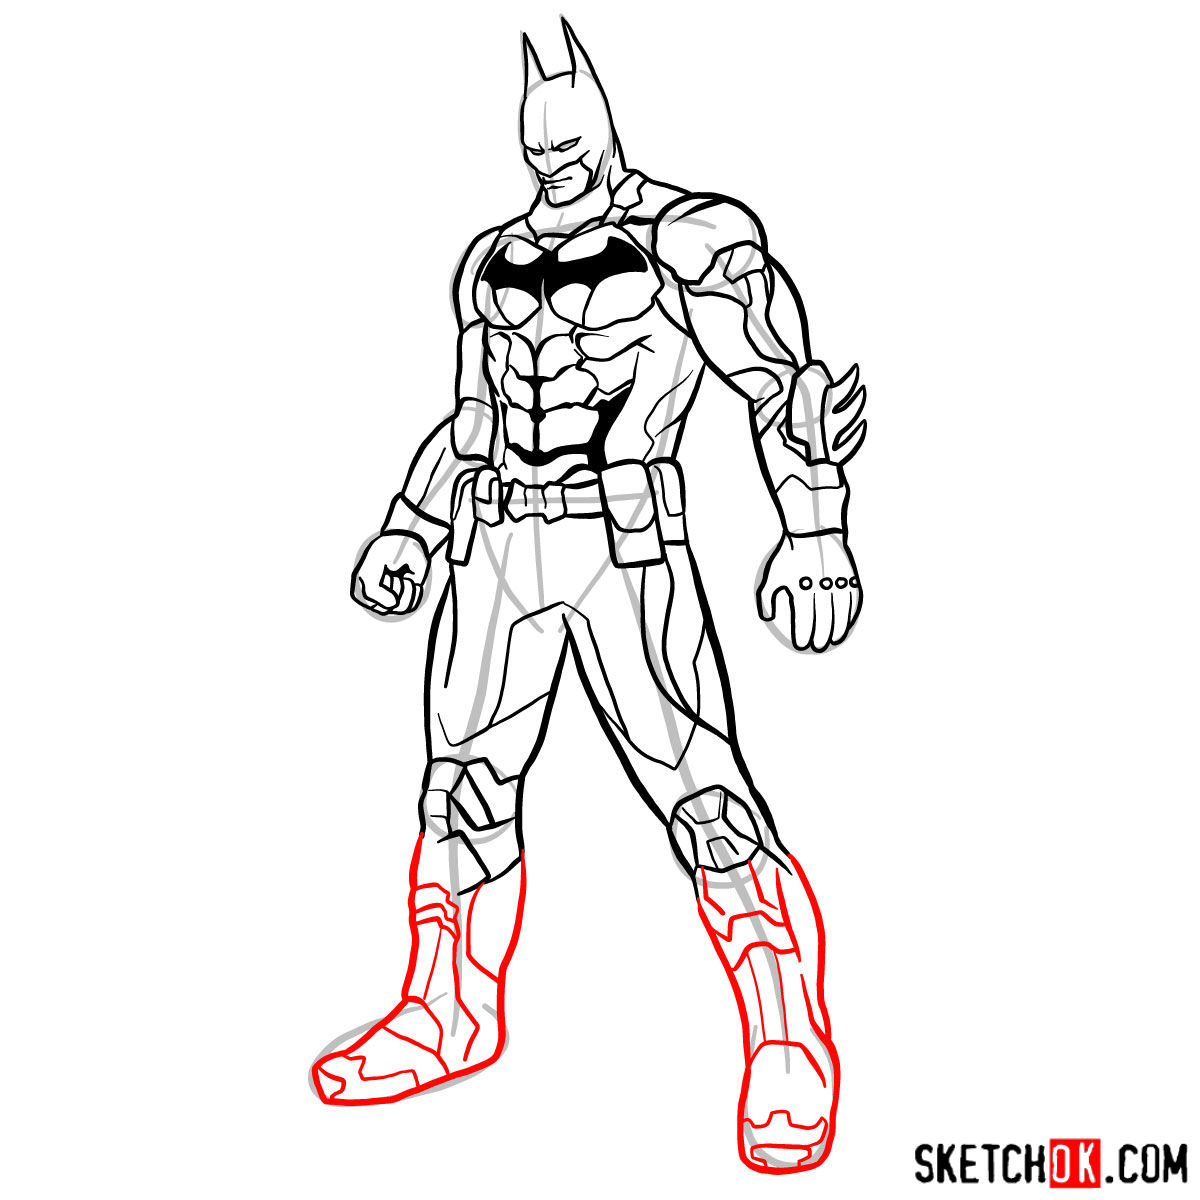 How to draw Batman the Dark Knight - step 13